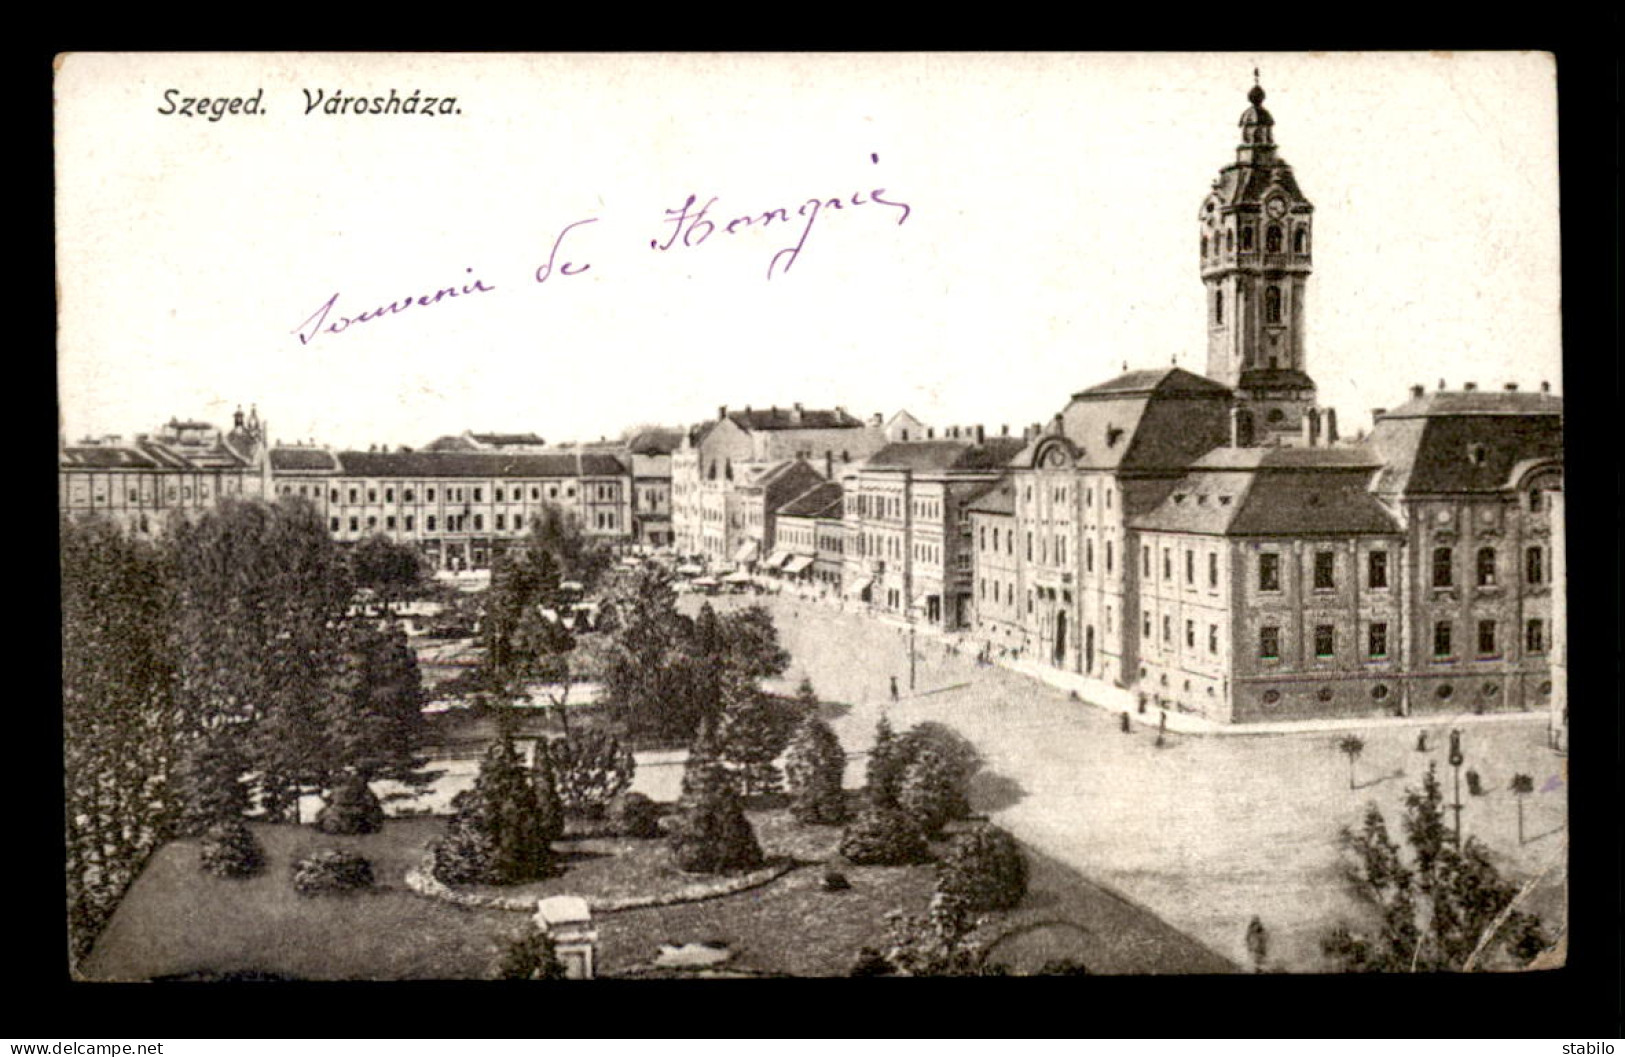 HONGRIE - SZEGED - VDROSHDZA - Hungary